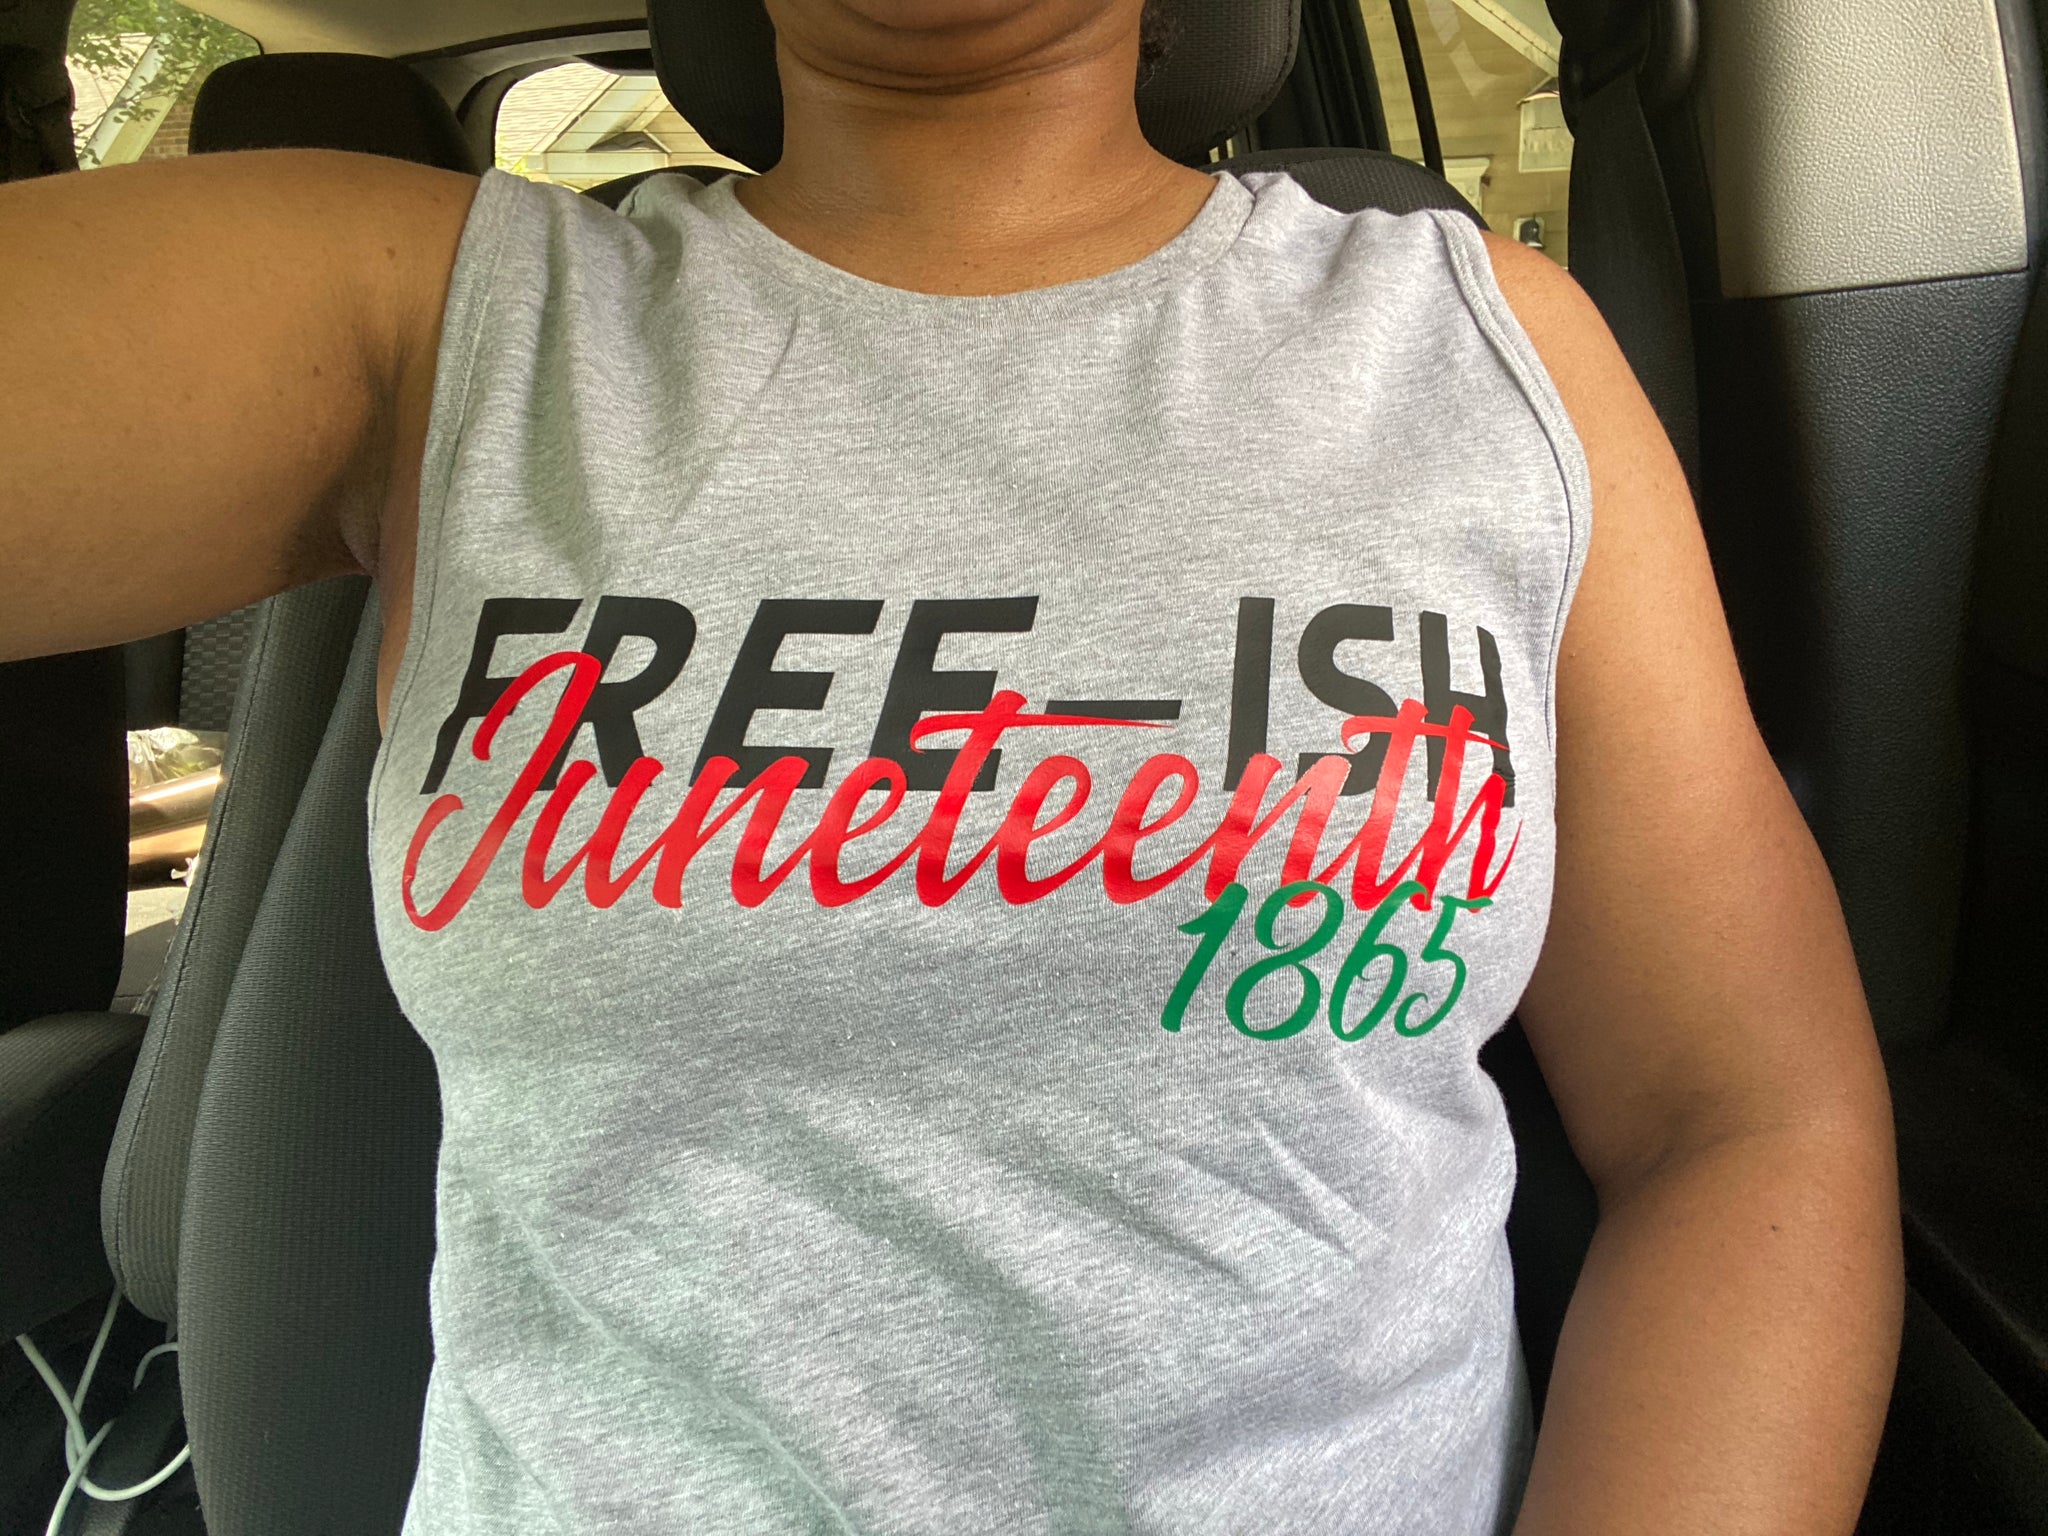 Free-ish Juneteenth